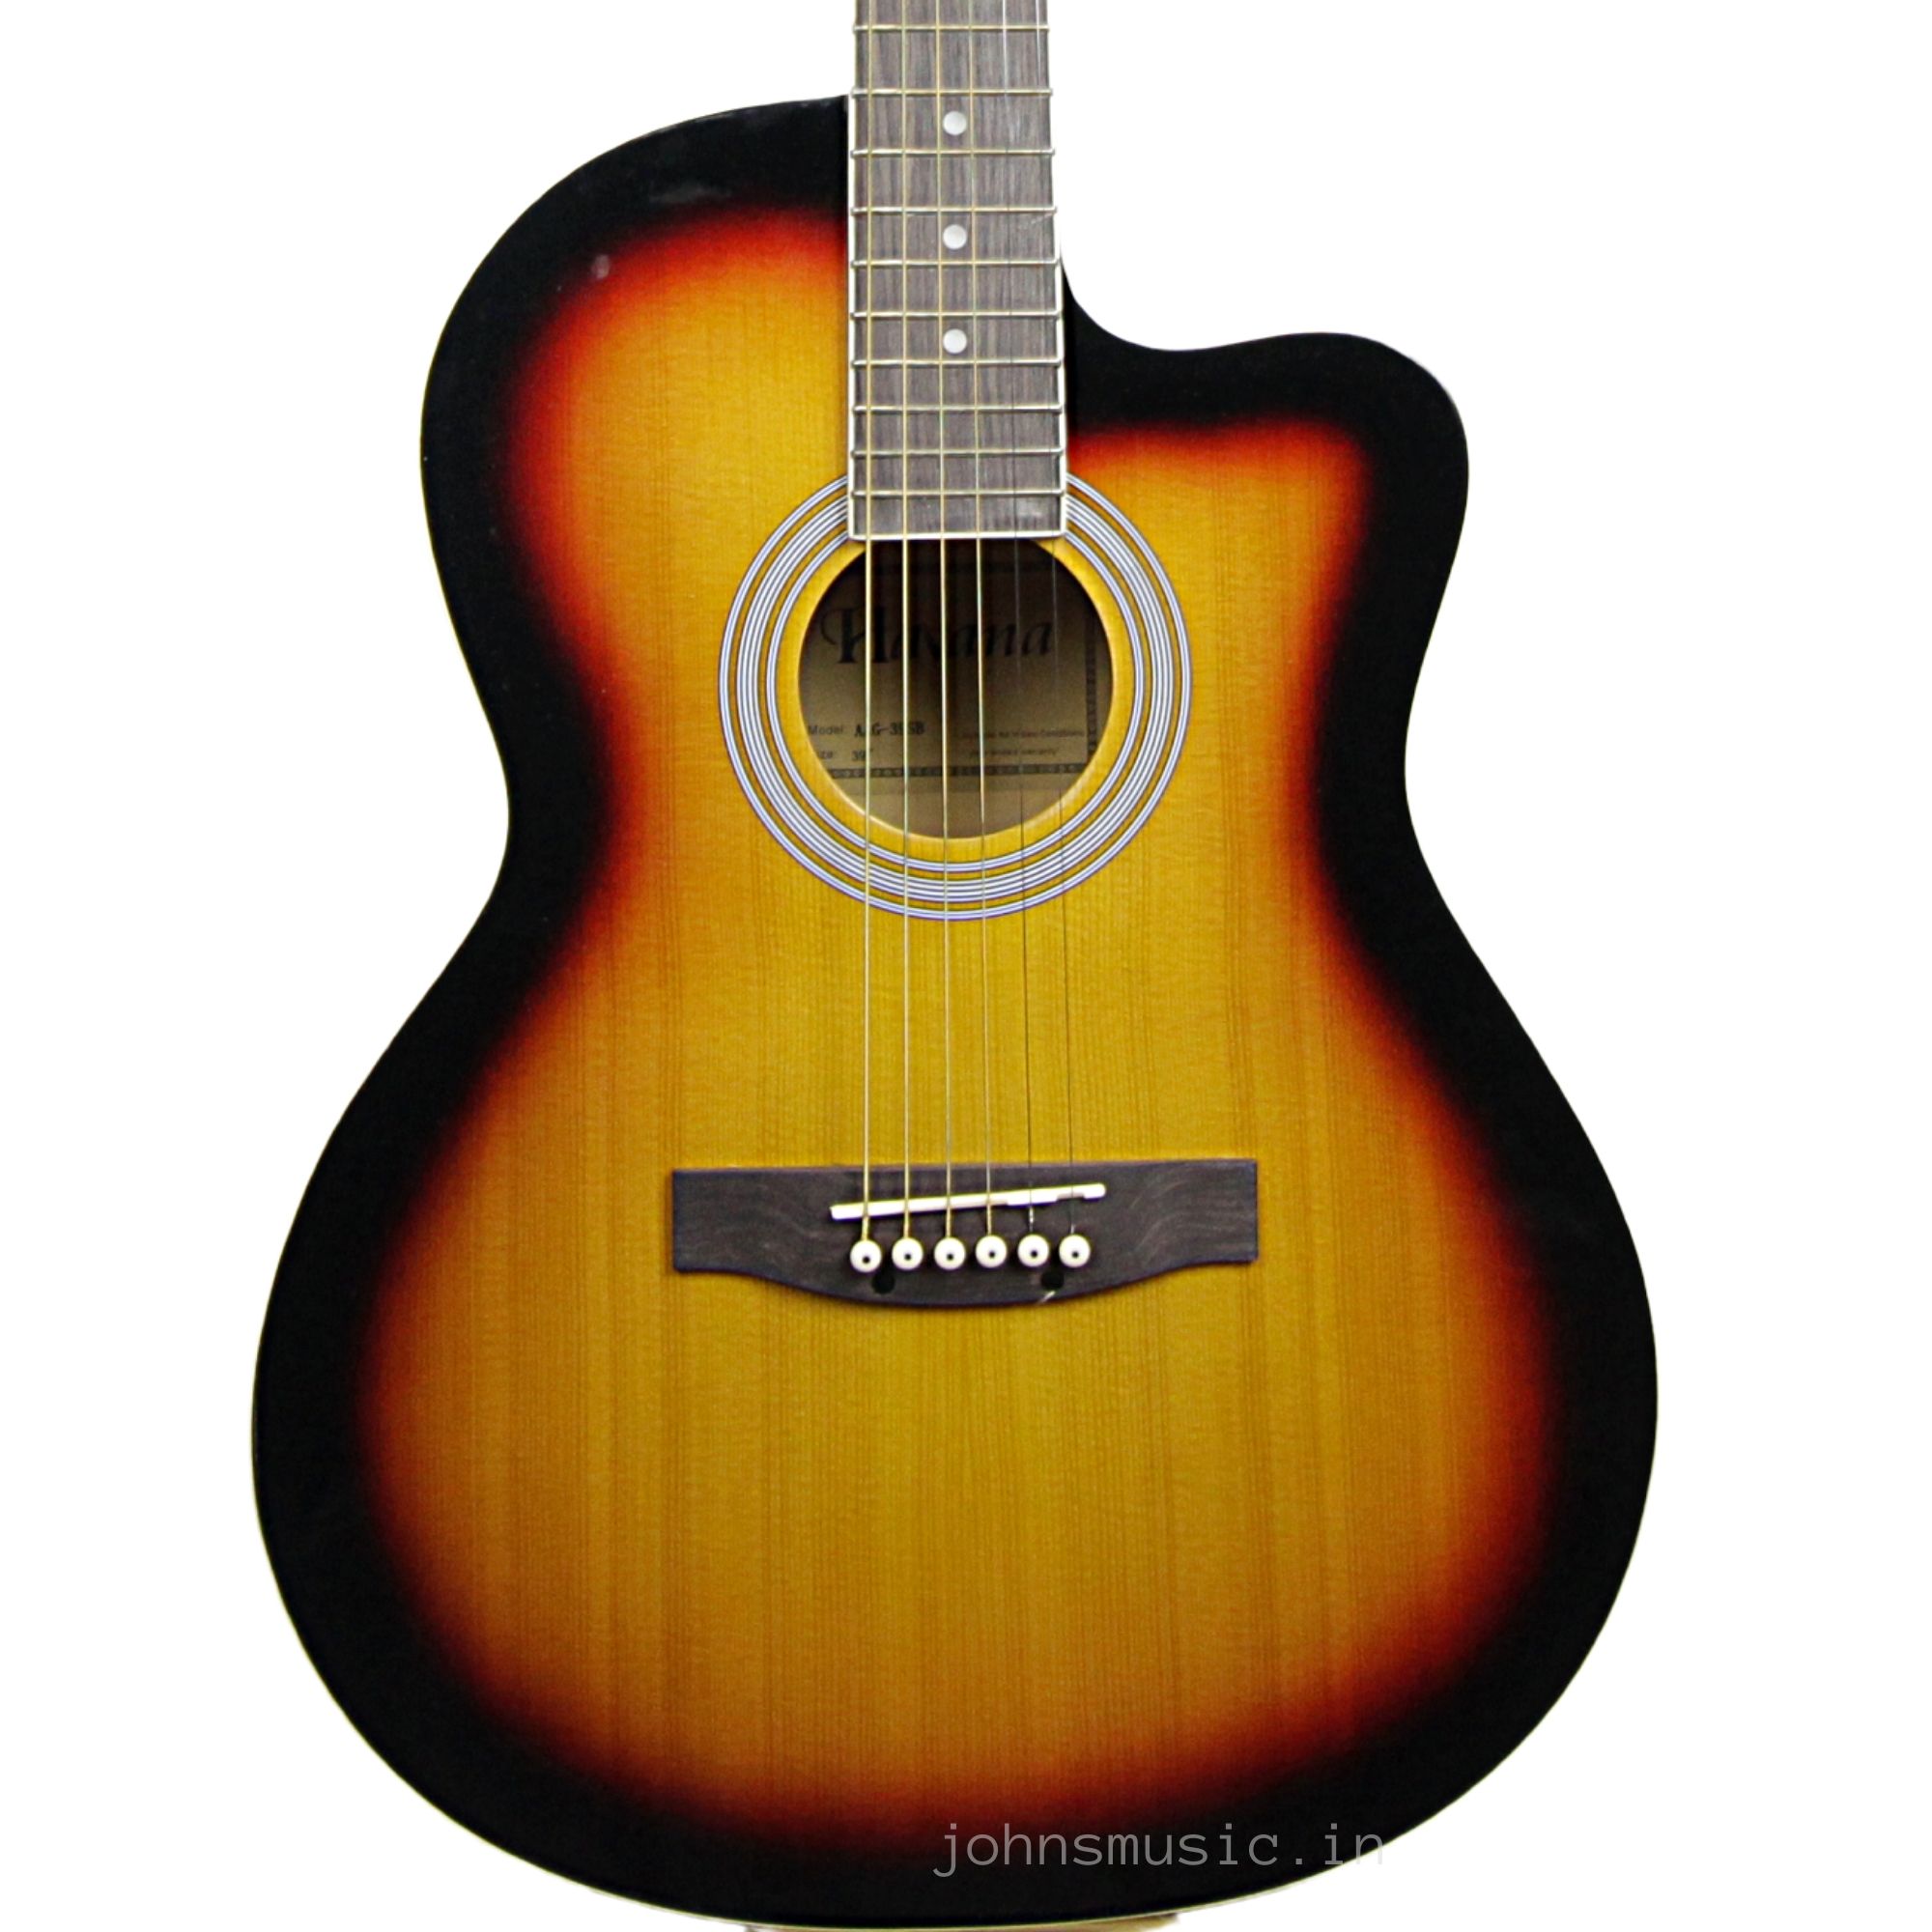 Buy Basic Acoustic Guitar from havana online in india